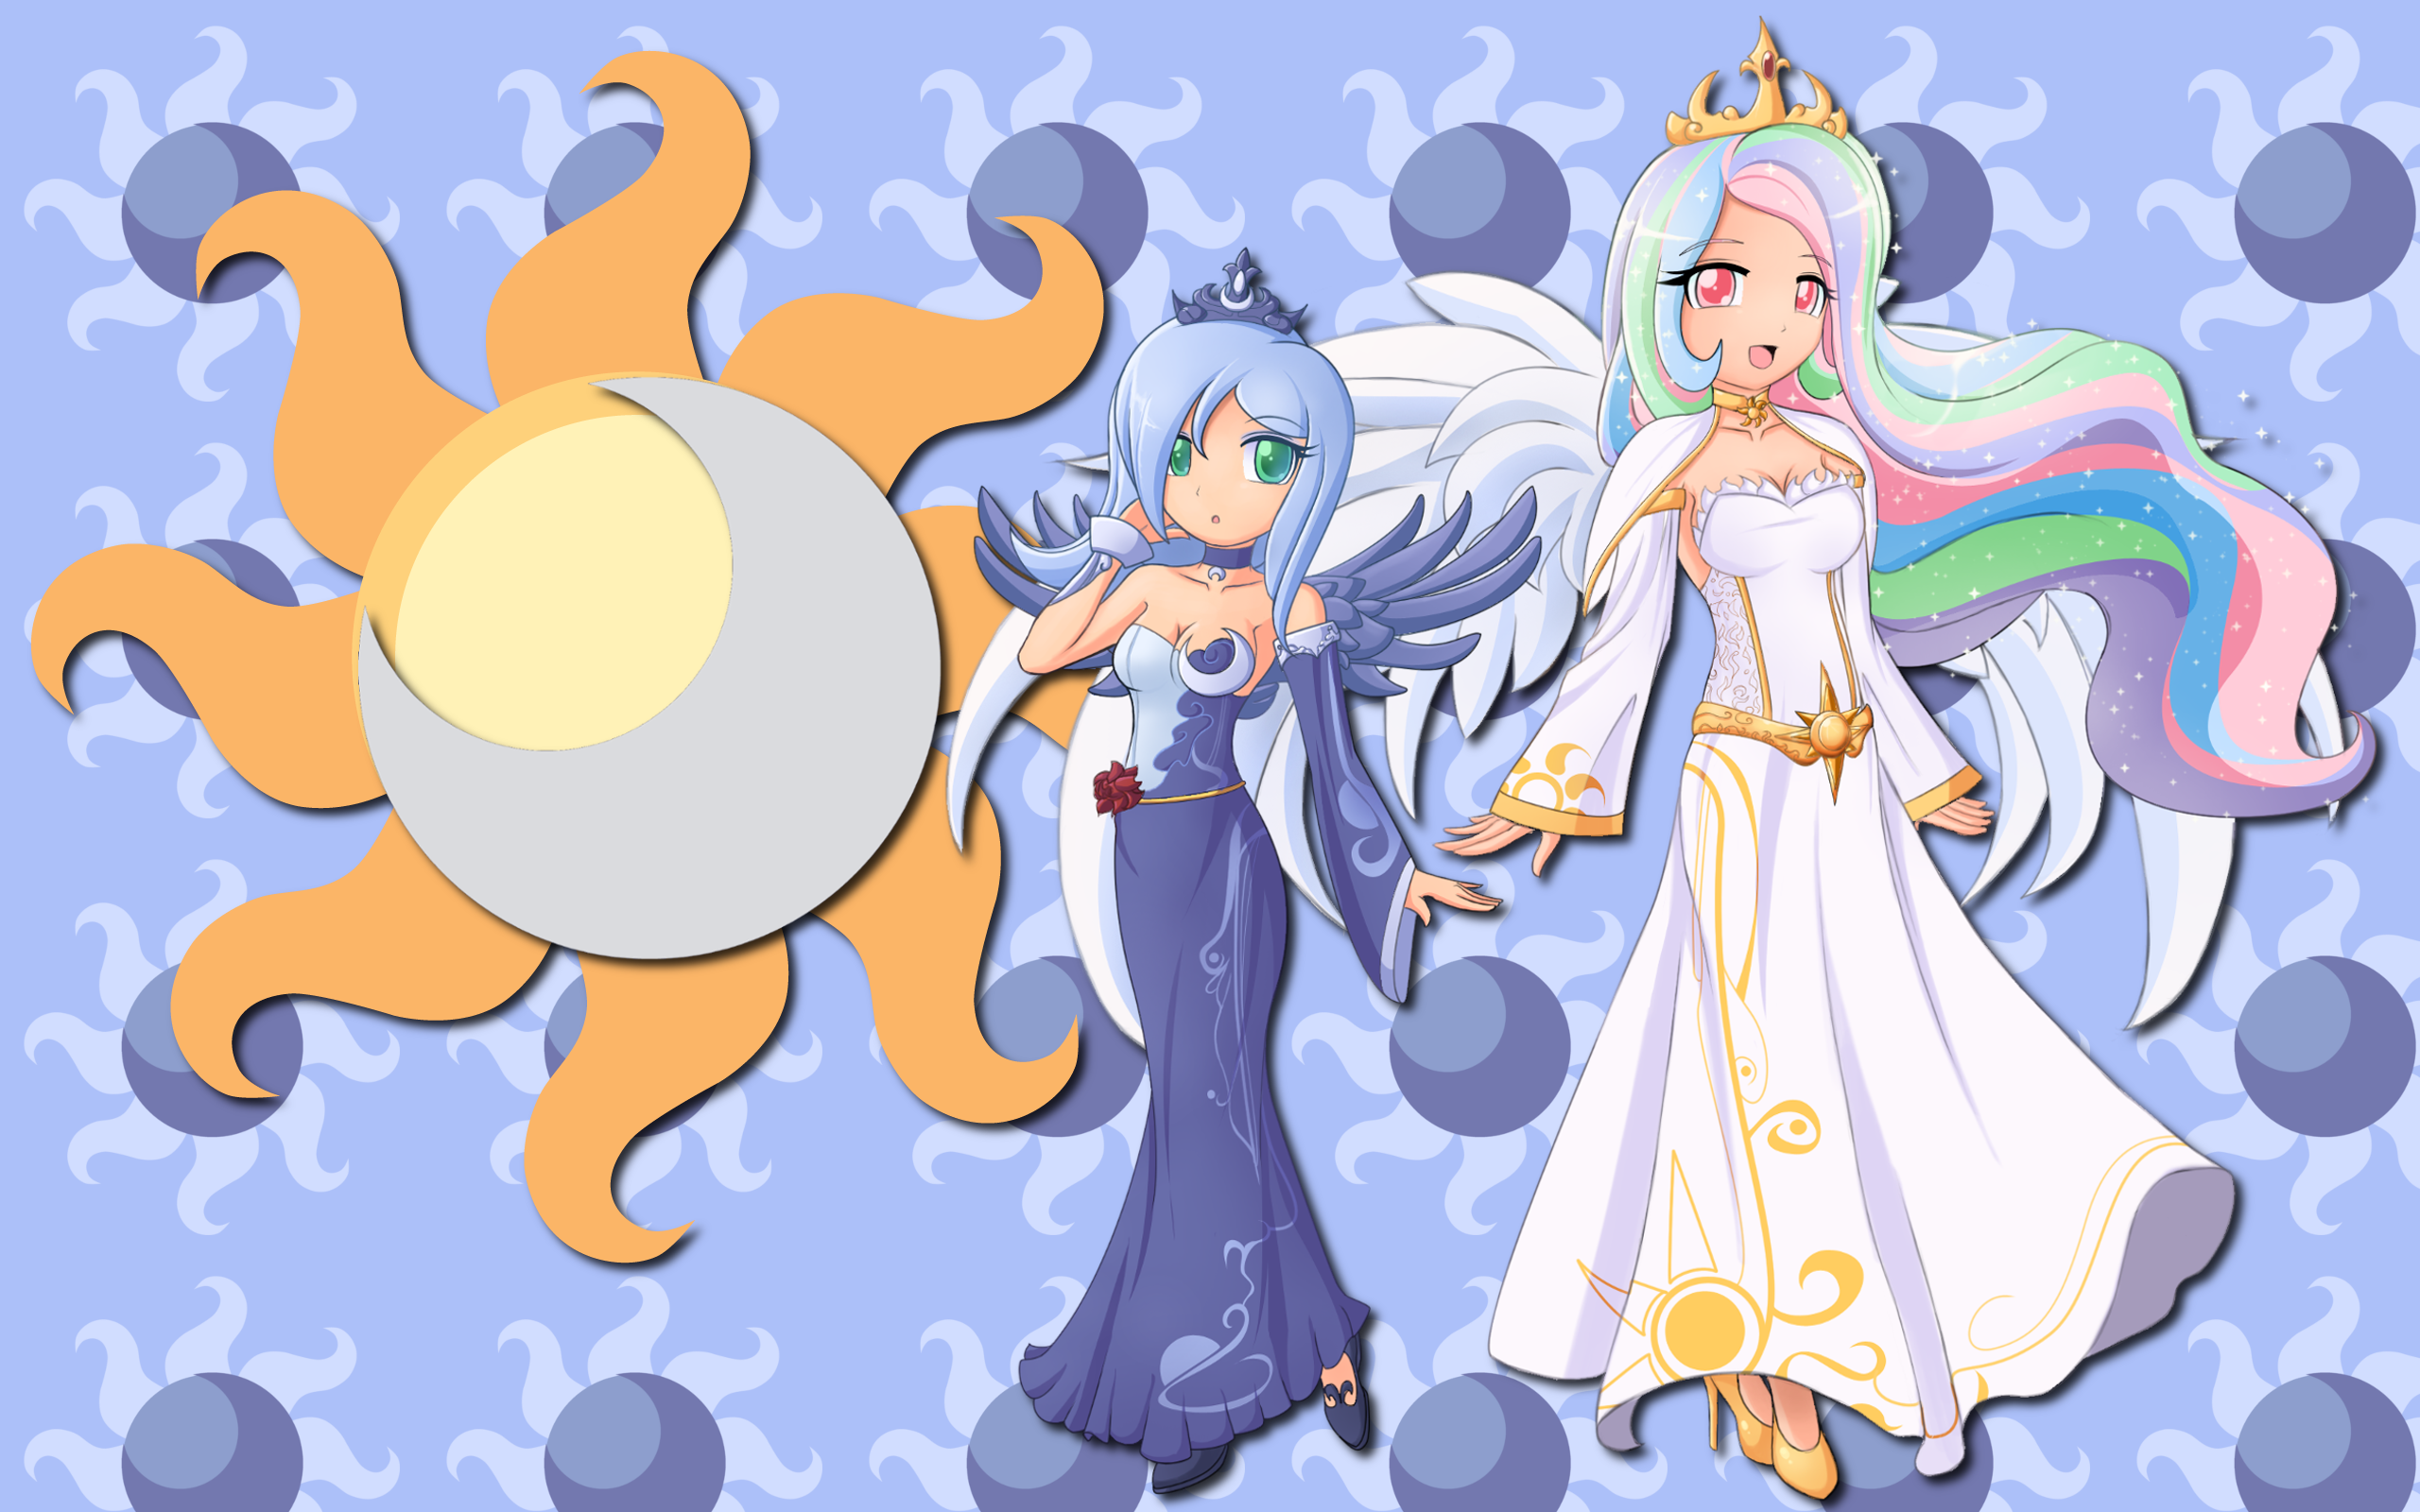 Human Luna and Celestia WP by AliceHumanSacrifice0, ooklah and Seiryuga